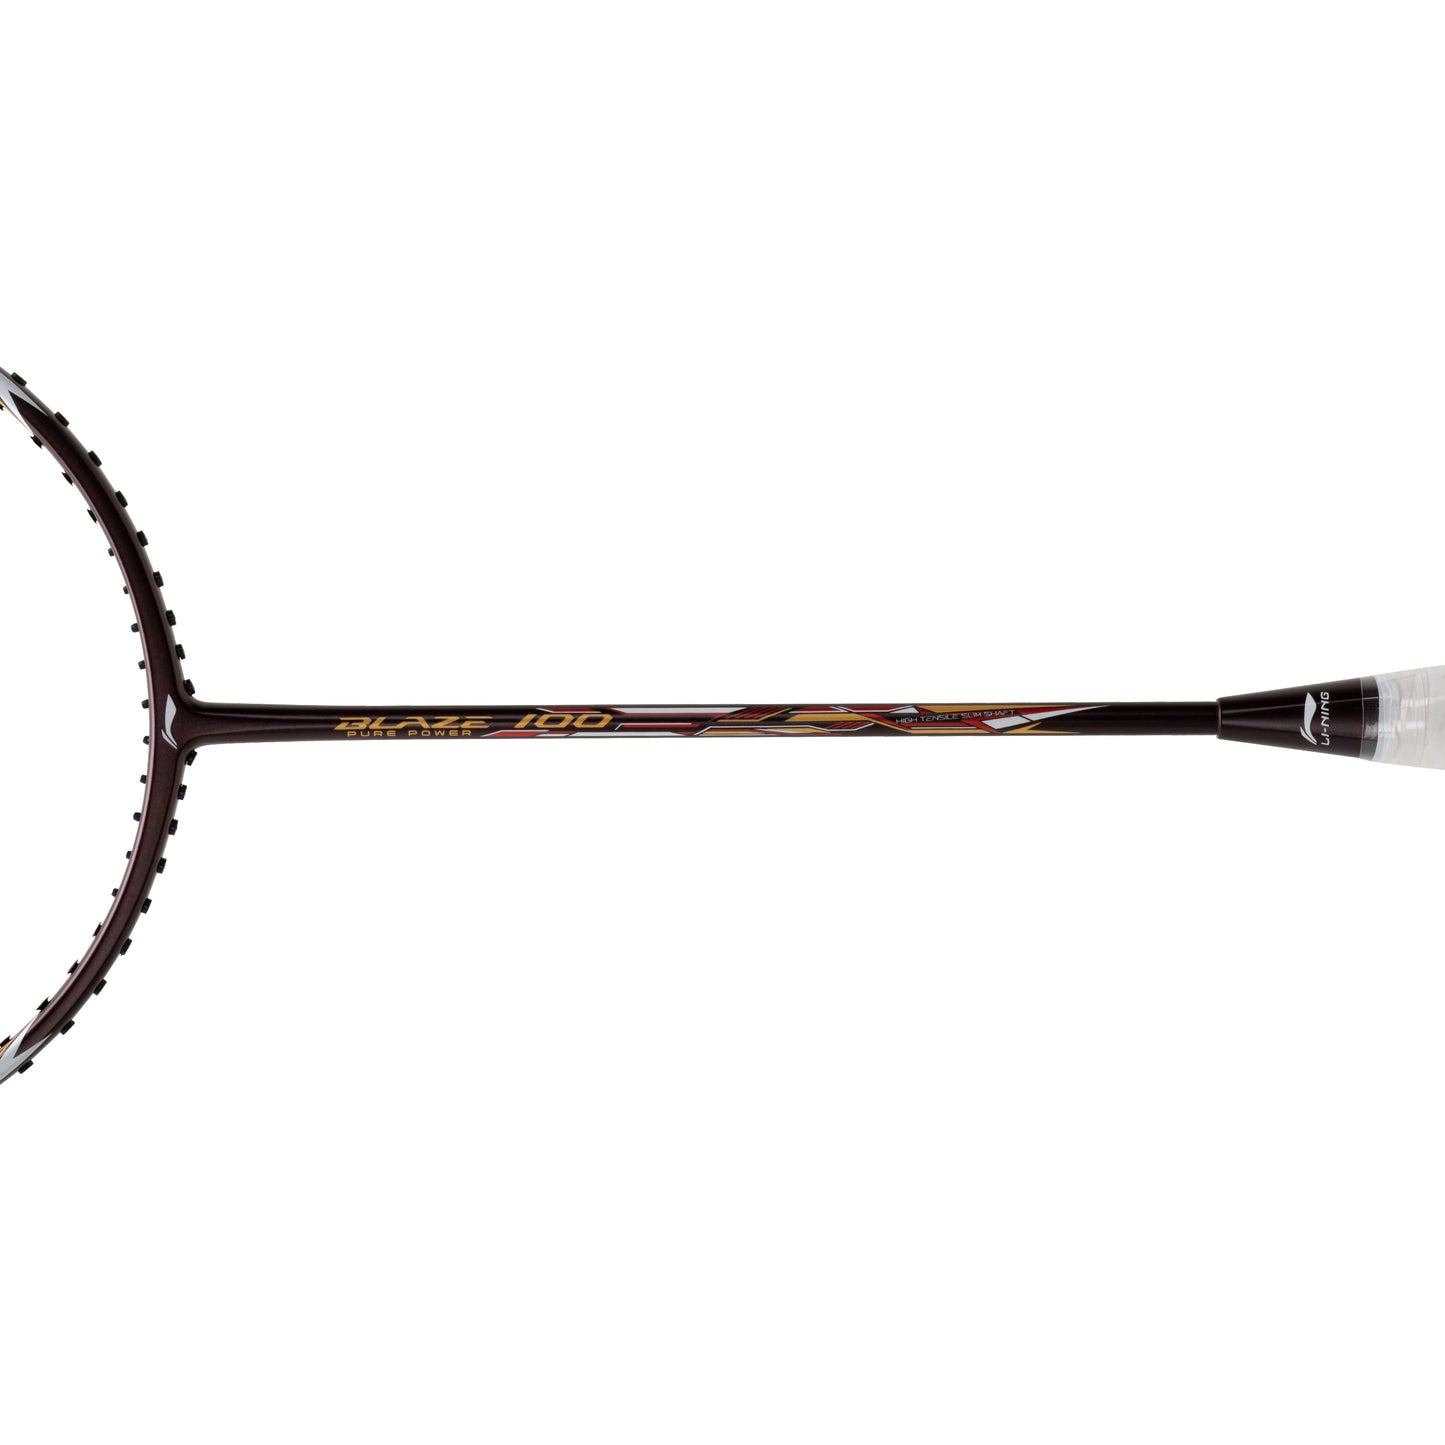 Li-Ning Blaze 100 Badminton Racket (Merlot/Gold/Red)